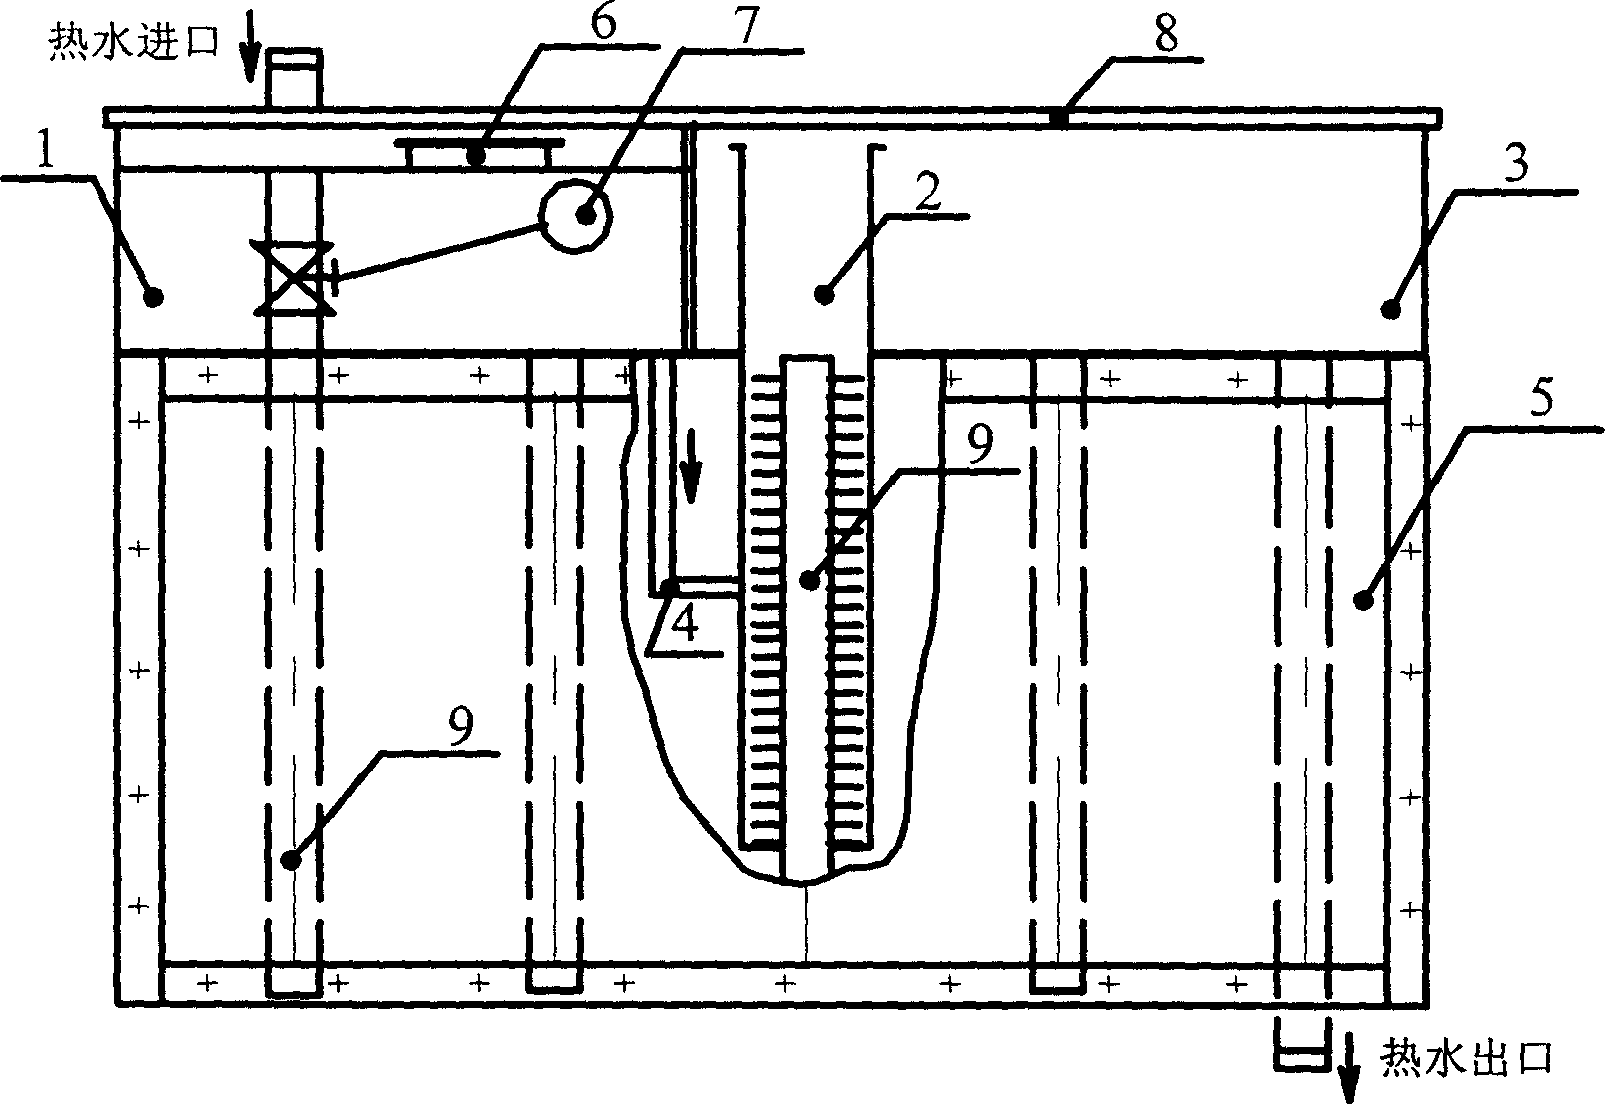 Multifunctional heating radiator device